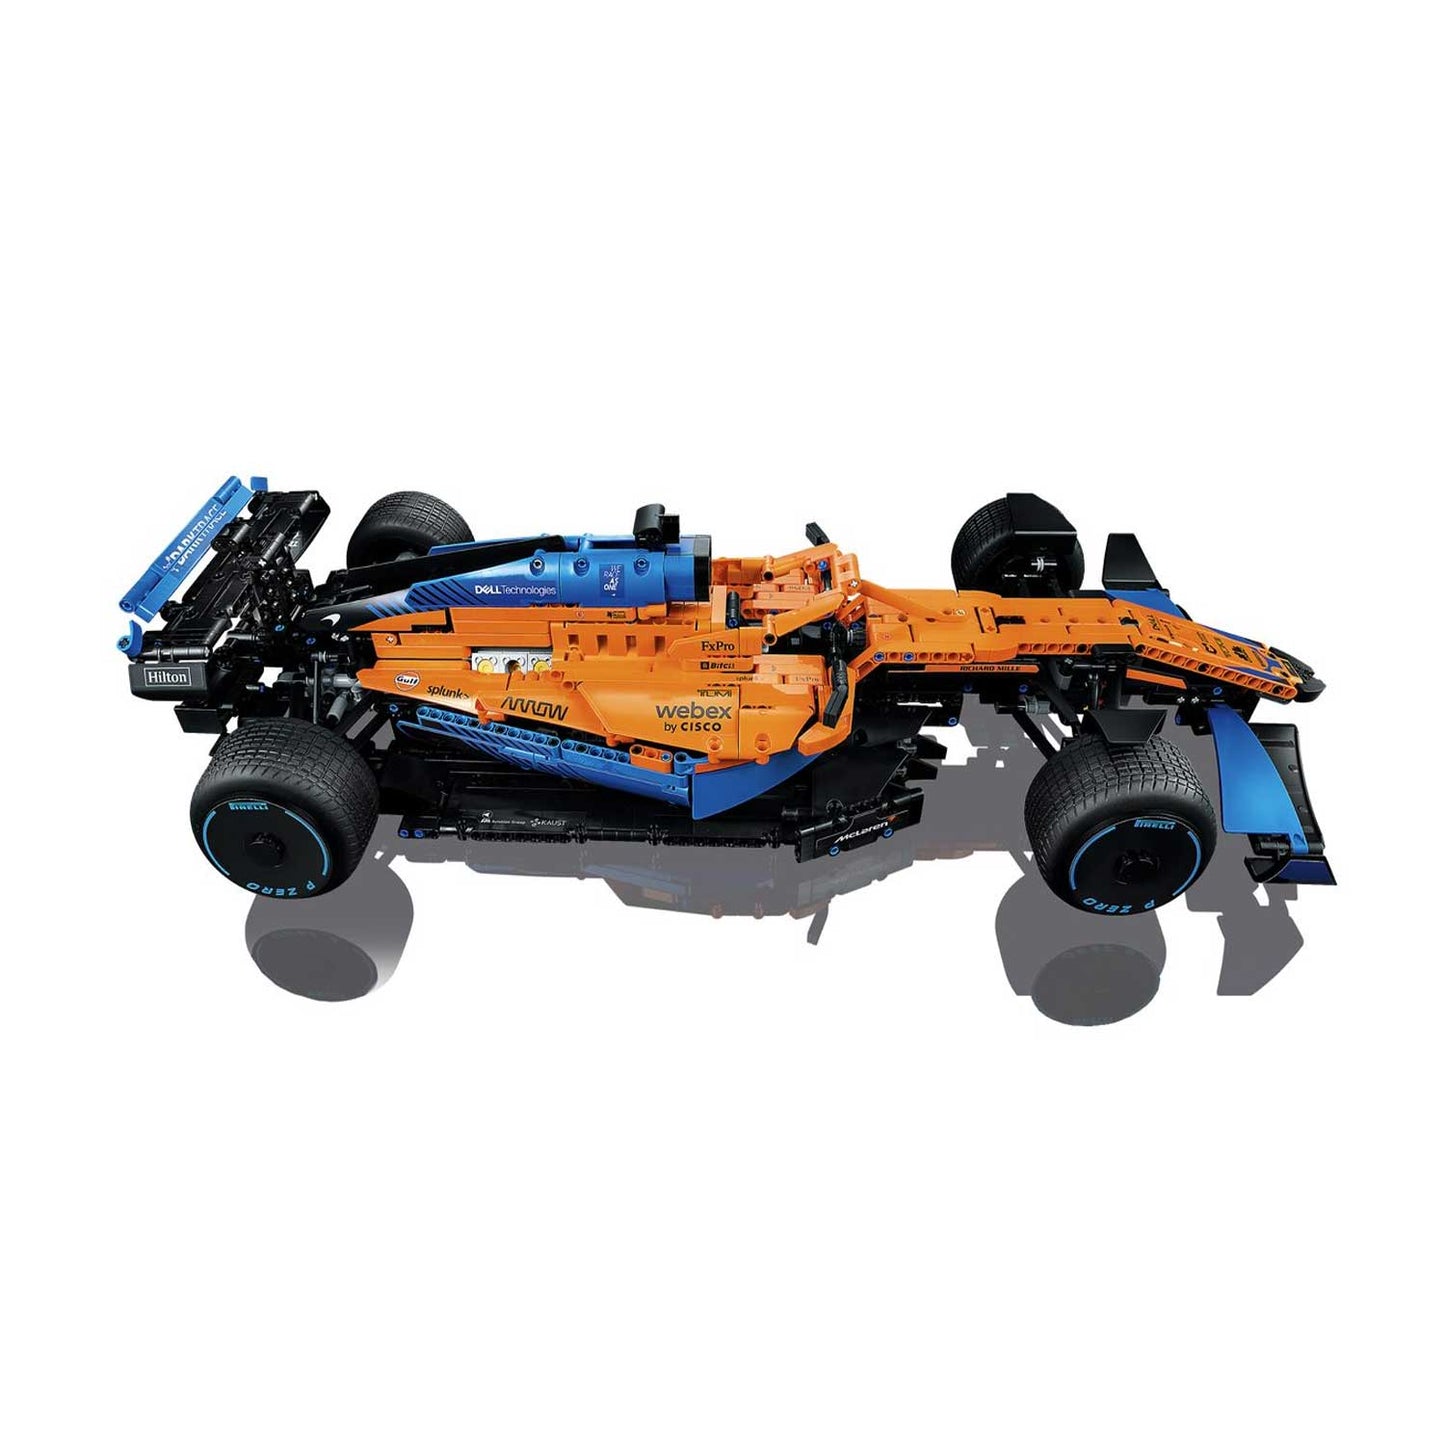 Lego - Technic Monoposto McLaren Formula 1 con o senza scritta Pirelli 42141